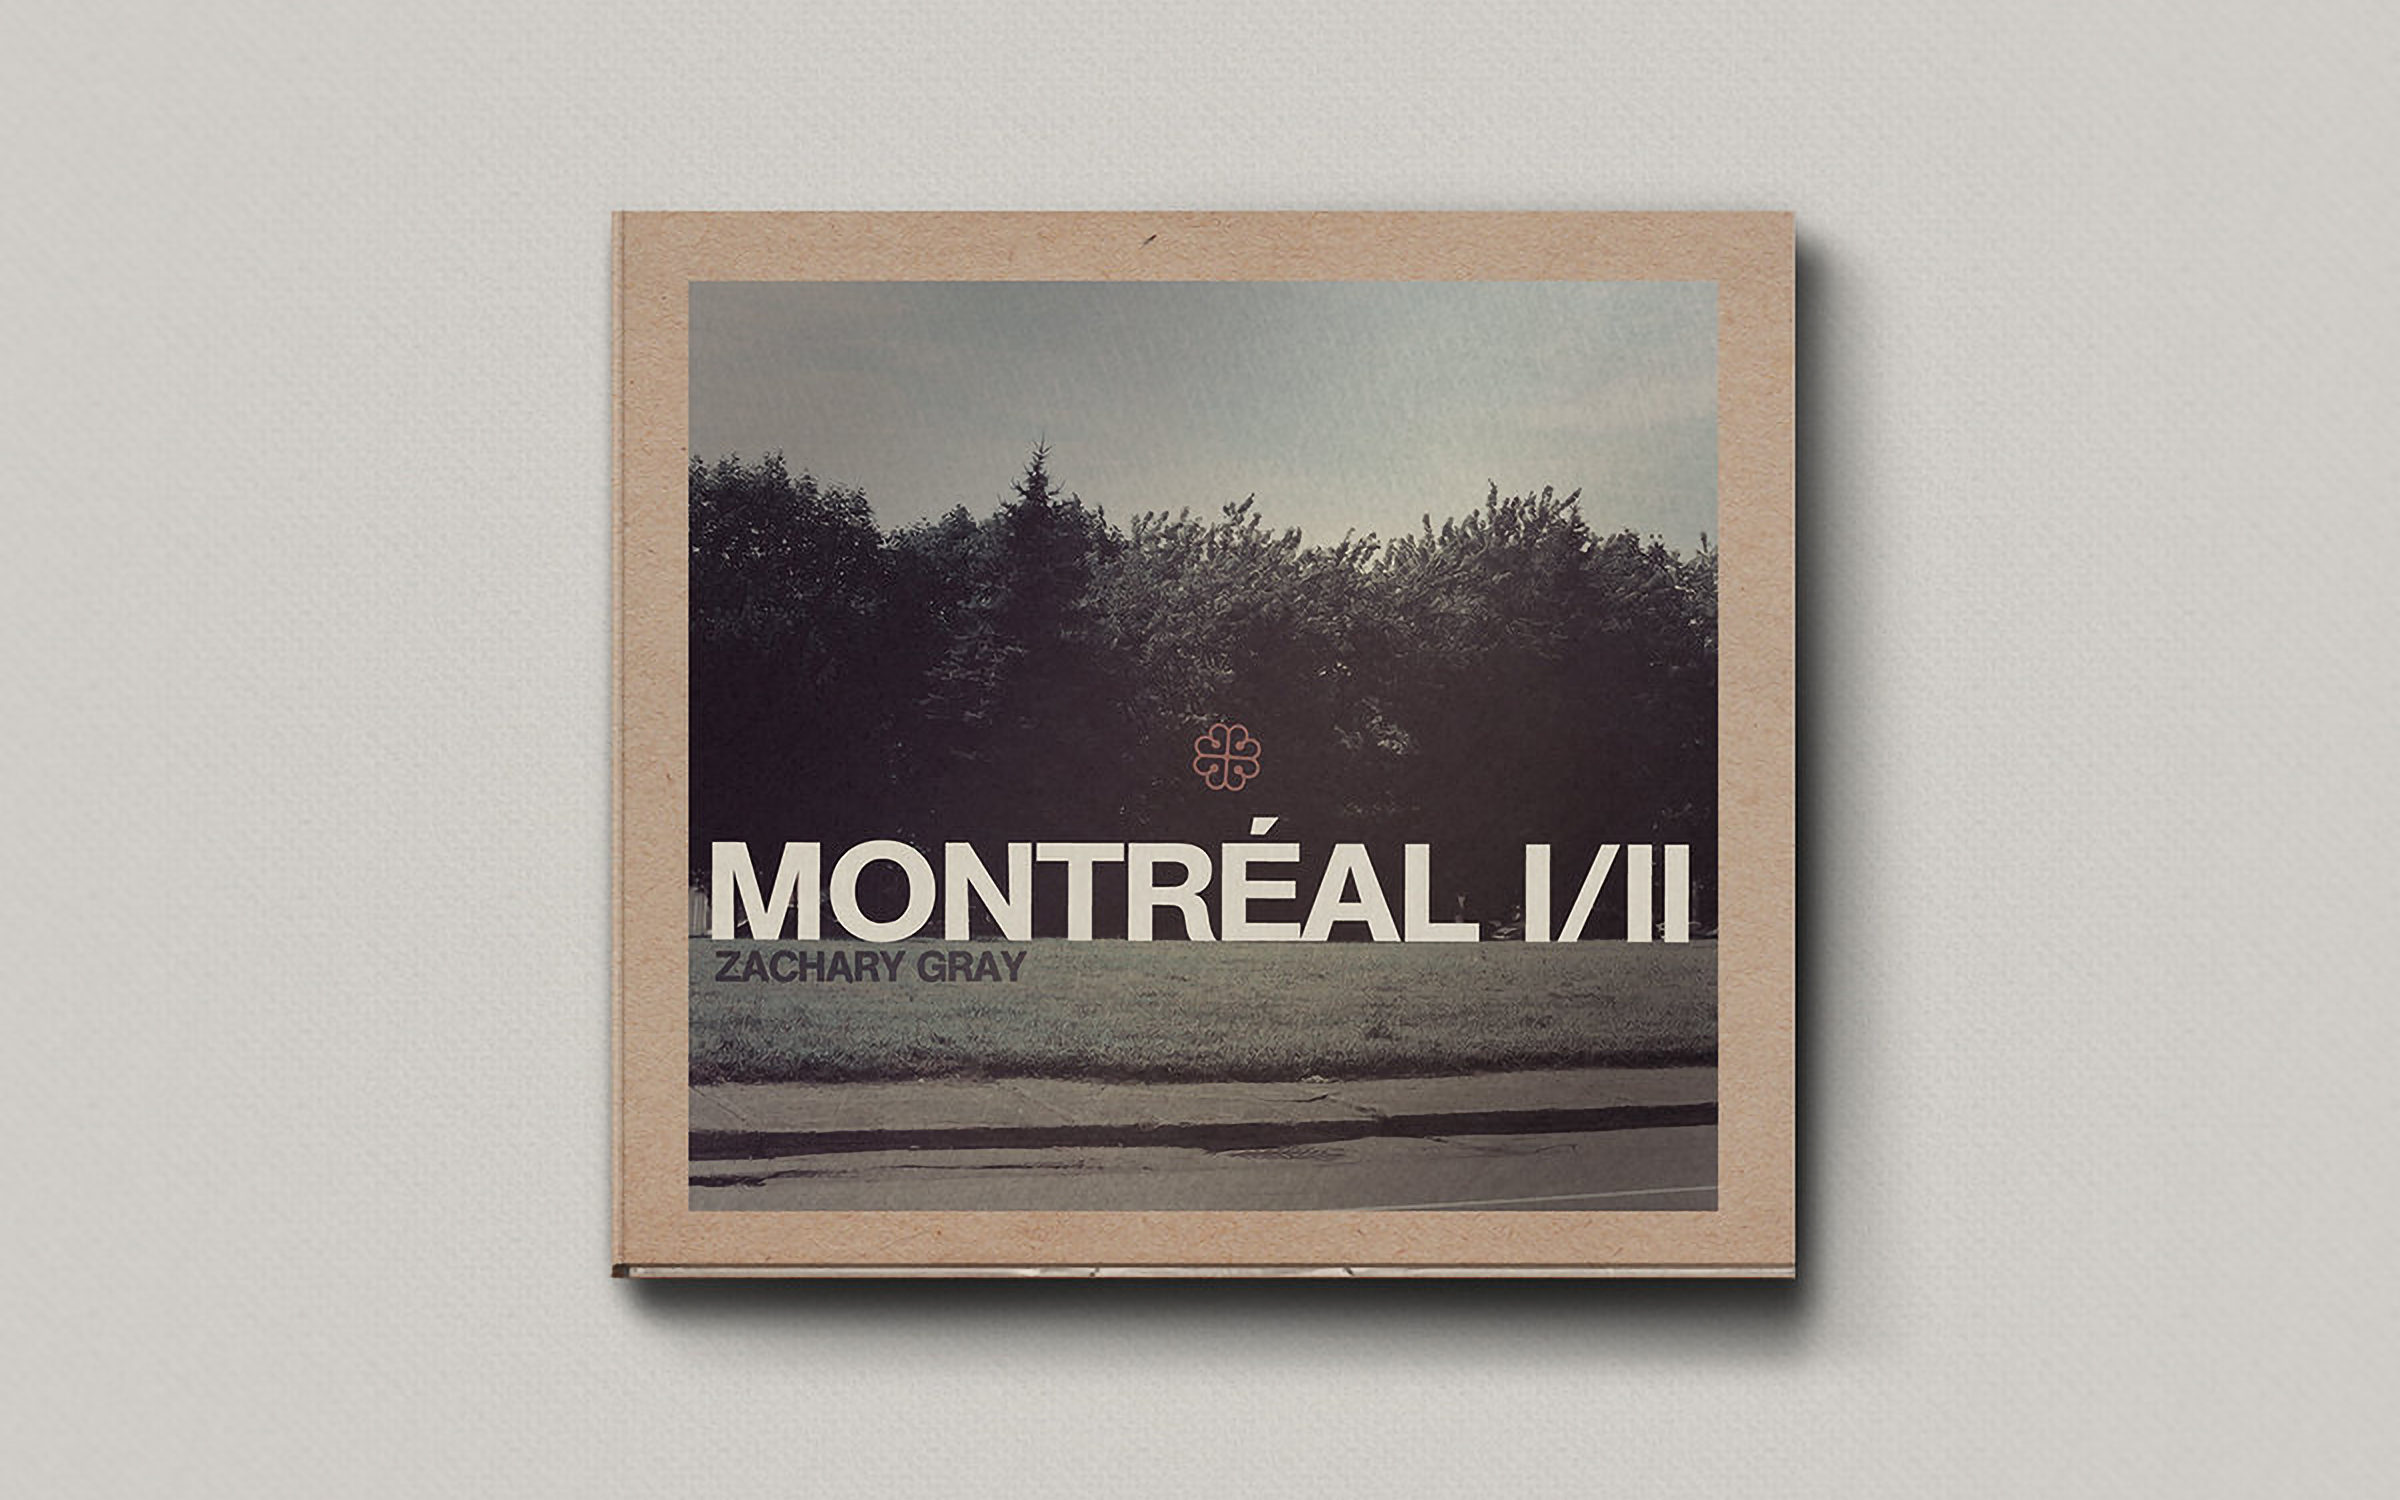 Montréal I/II (CD)